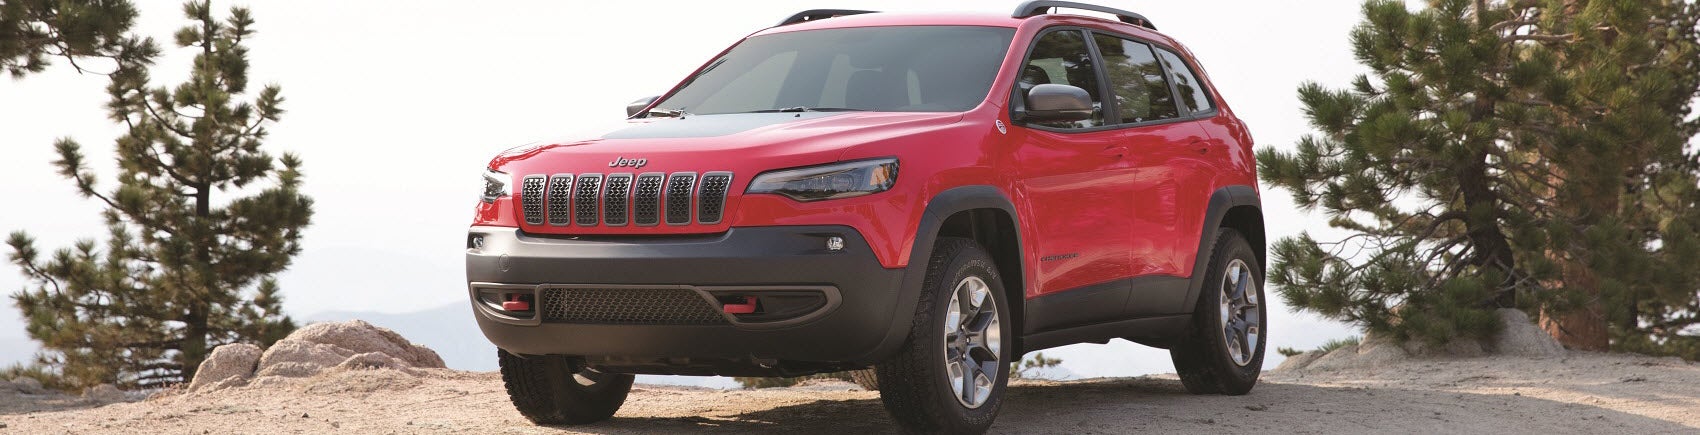 Jeep Cherokee Trim Levels | Elkins CDJR